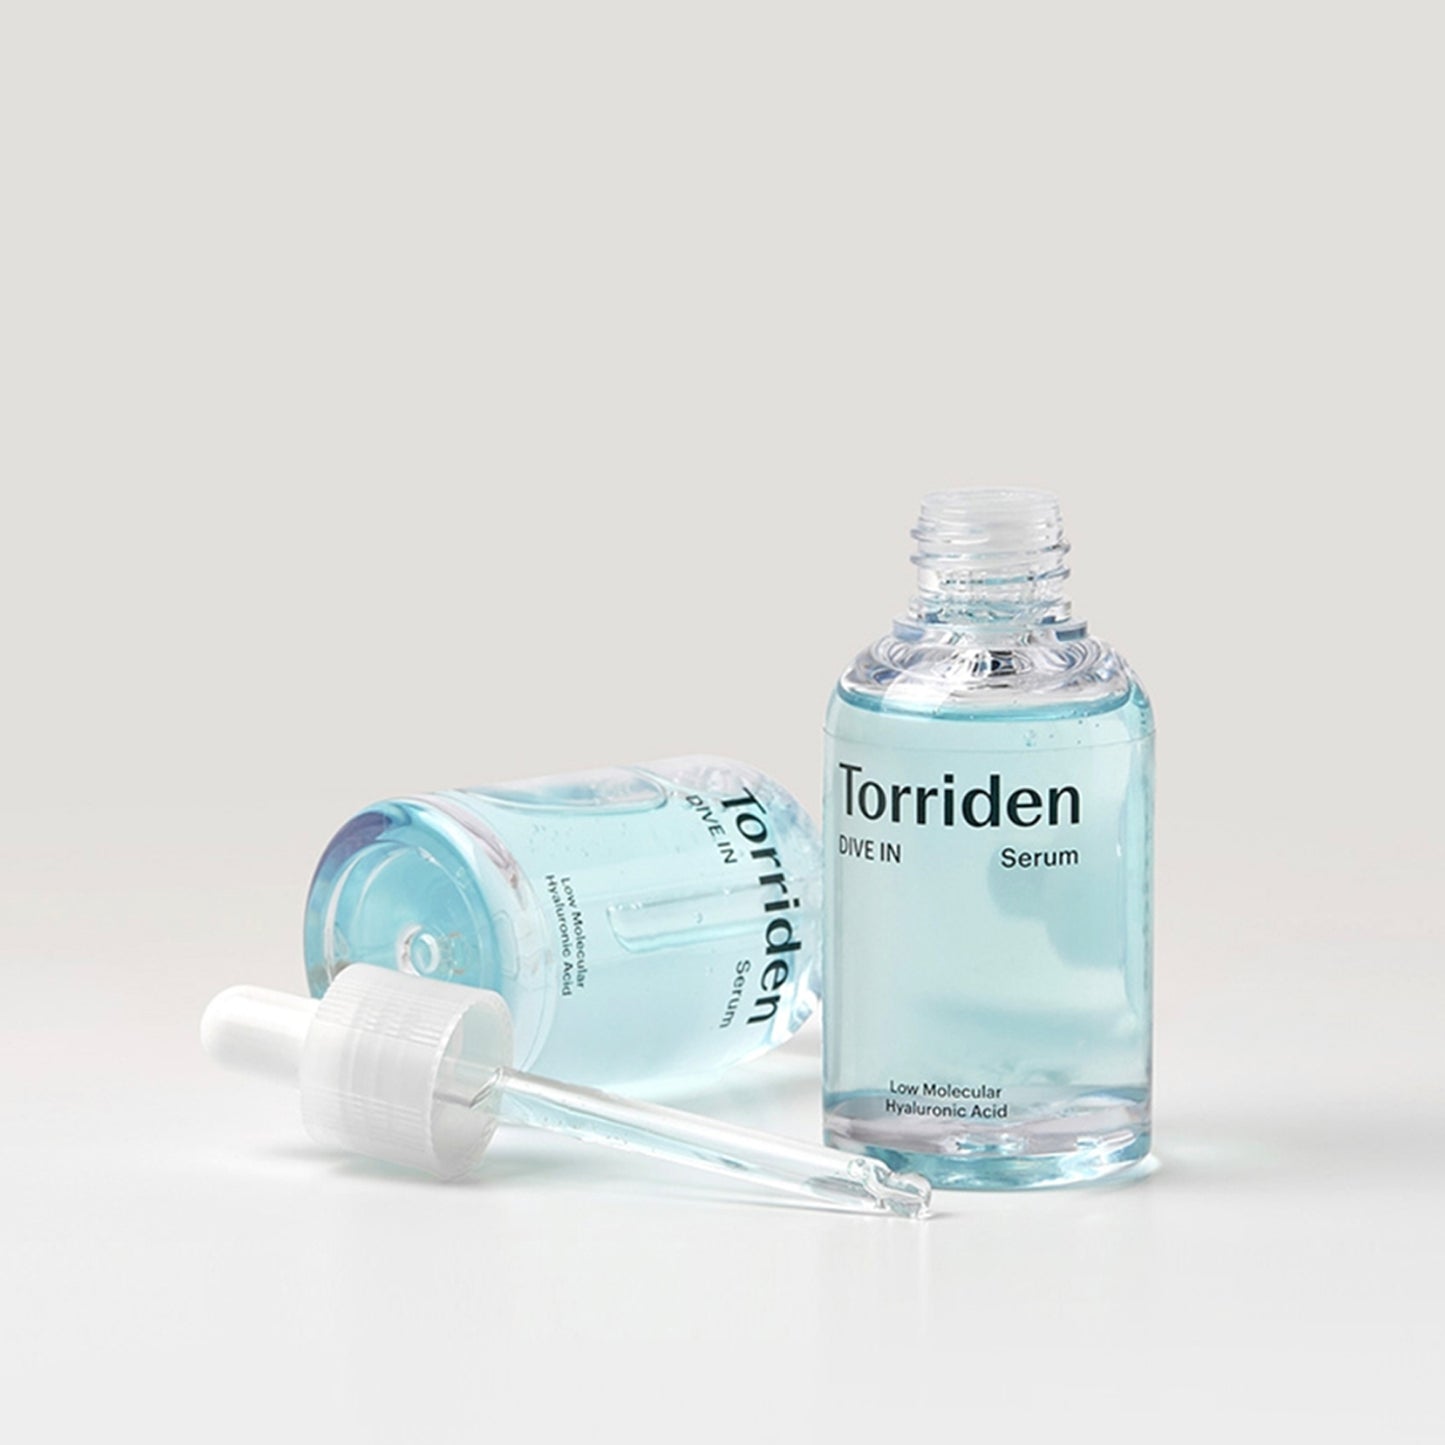 TORRIDEN DIVE-IN Low Molecular Hyaluronic Acid Serum (50ml)